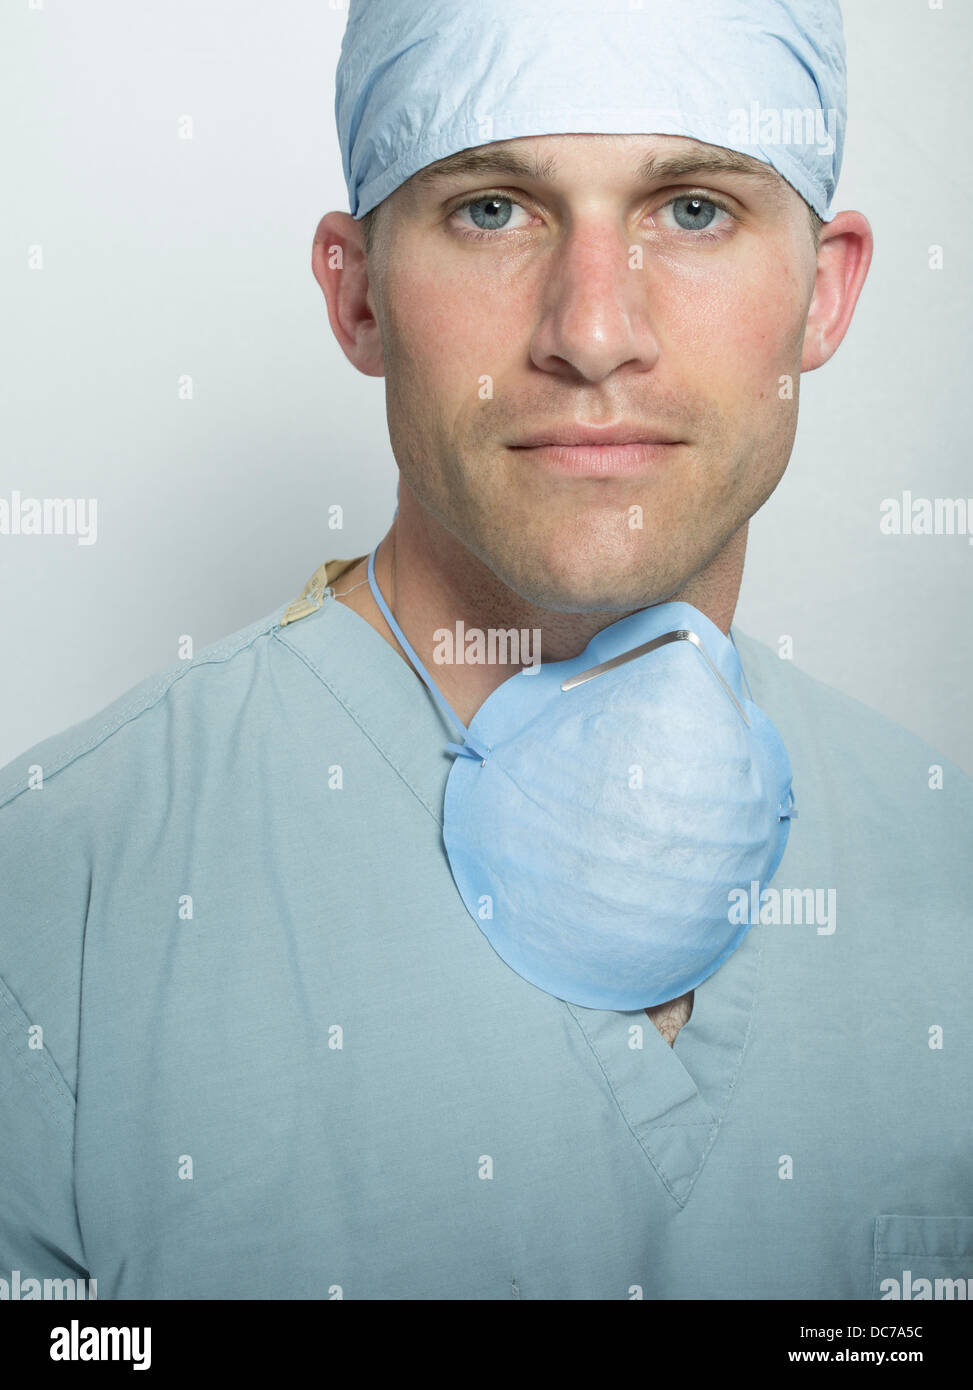 Maschio / medico chirurgo indossando hat, chirurgico scrubs e maschera. Foto Stock